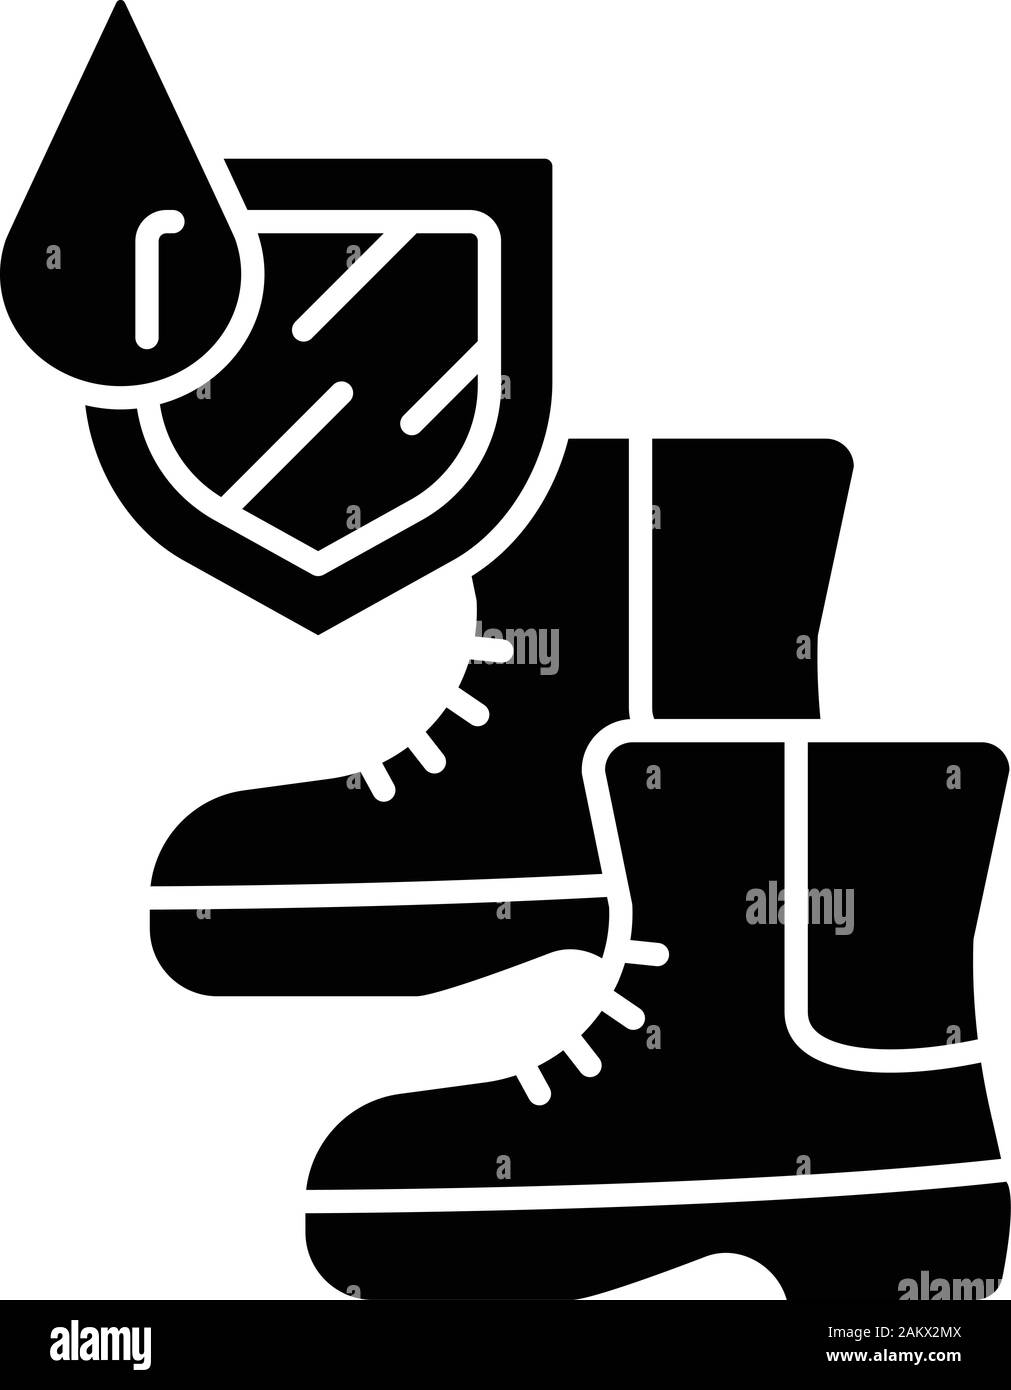 Waterproof boots glyph icon. Water resistant shoes. Rainproof footwear. Hydrophobic, repellent outerwear. Waterproof DWR shoes. Silhouette symbol. Neg Stock Vector